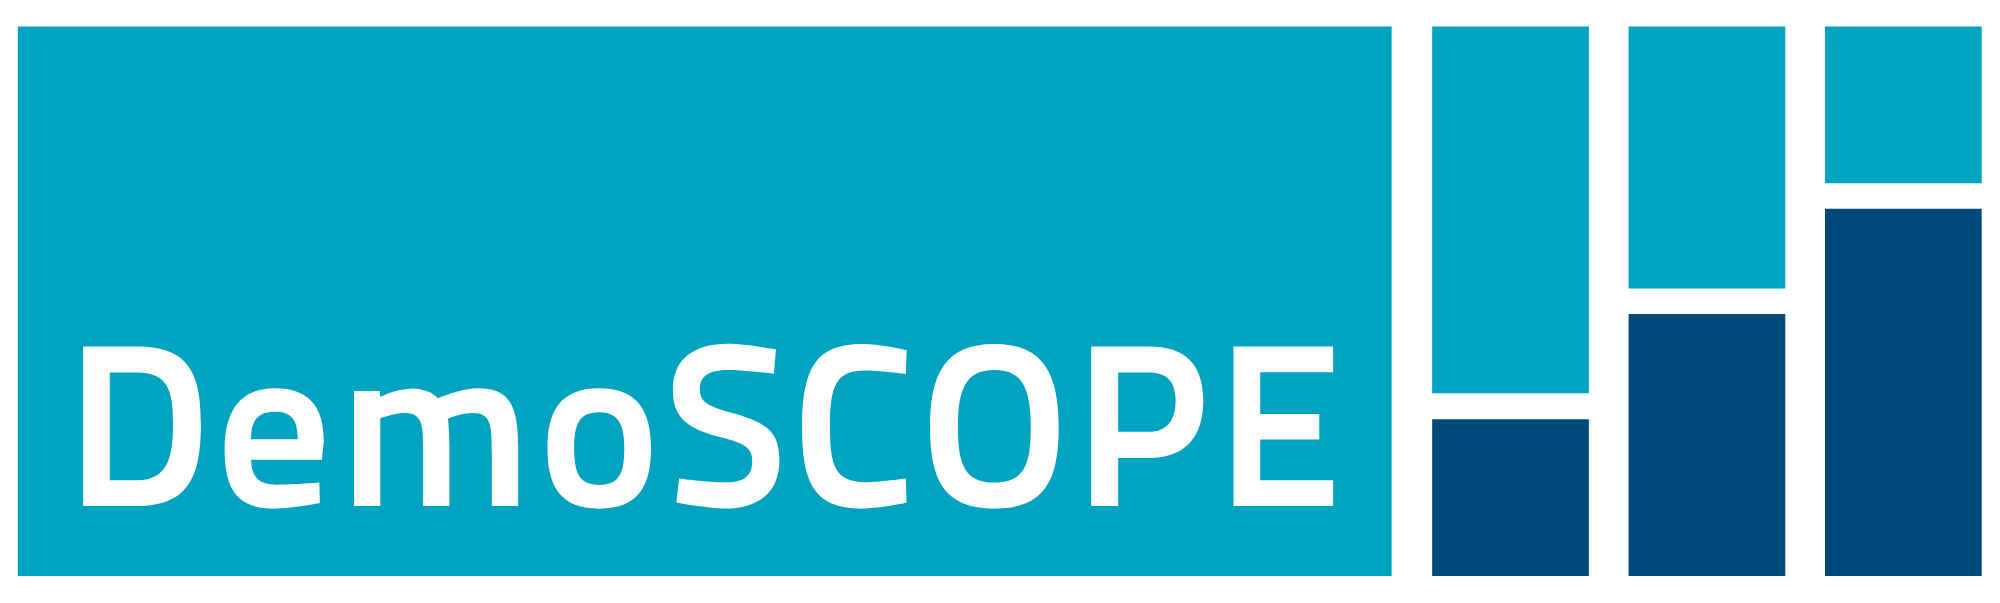 Demoscope Logo